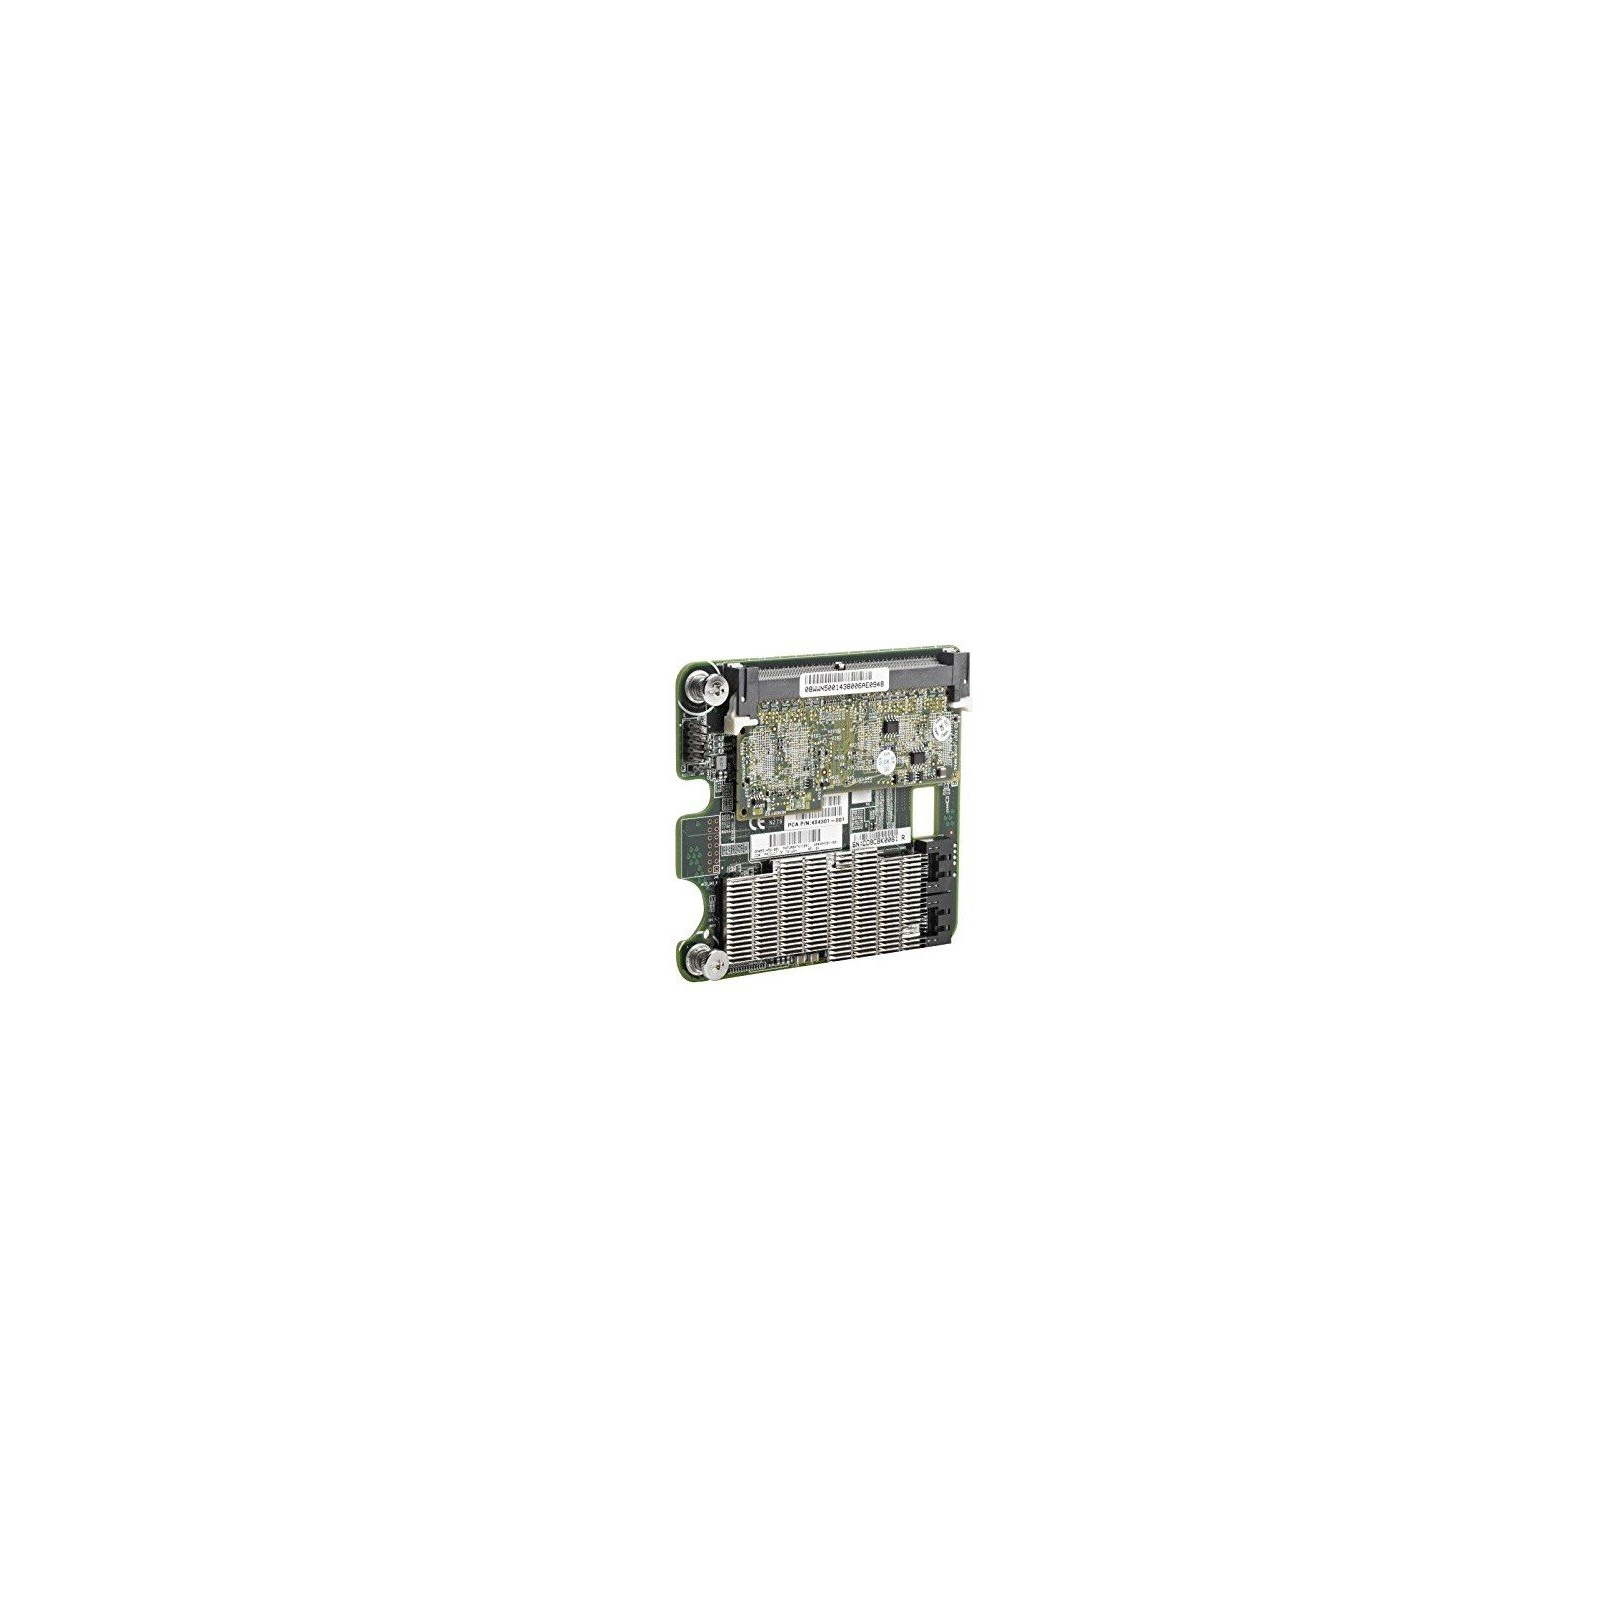 Контролер RAID HP Smart Array P712m (488348-B21)